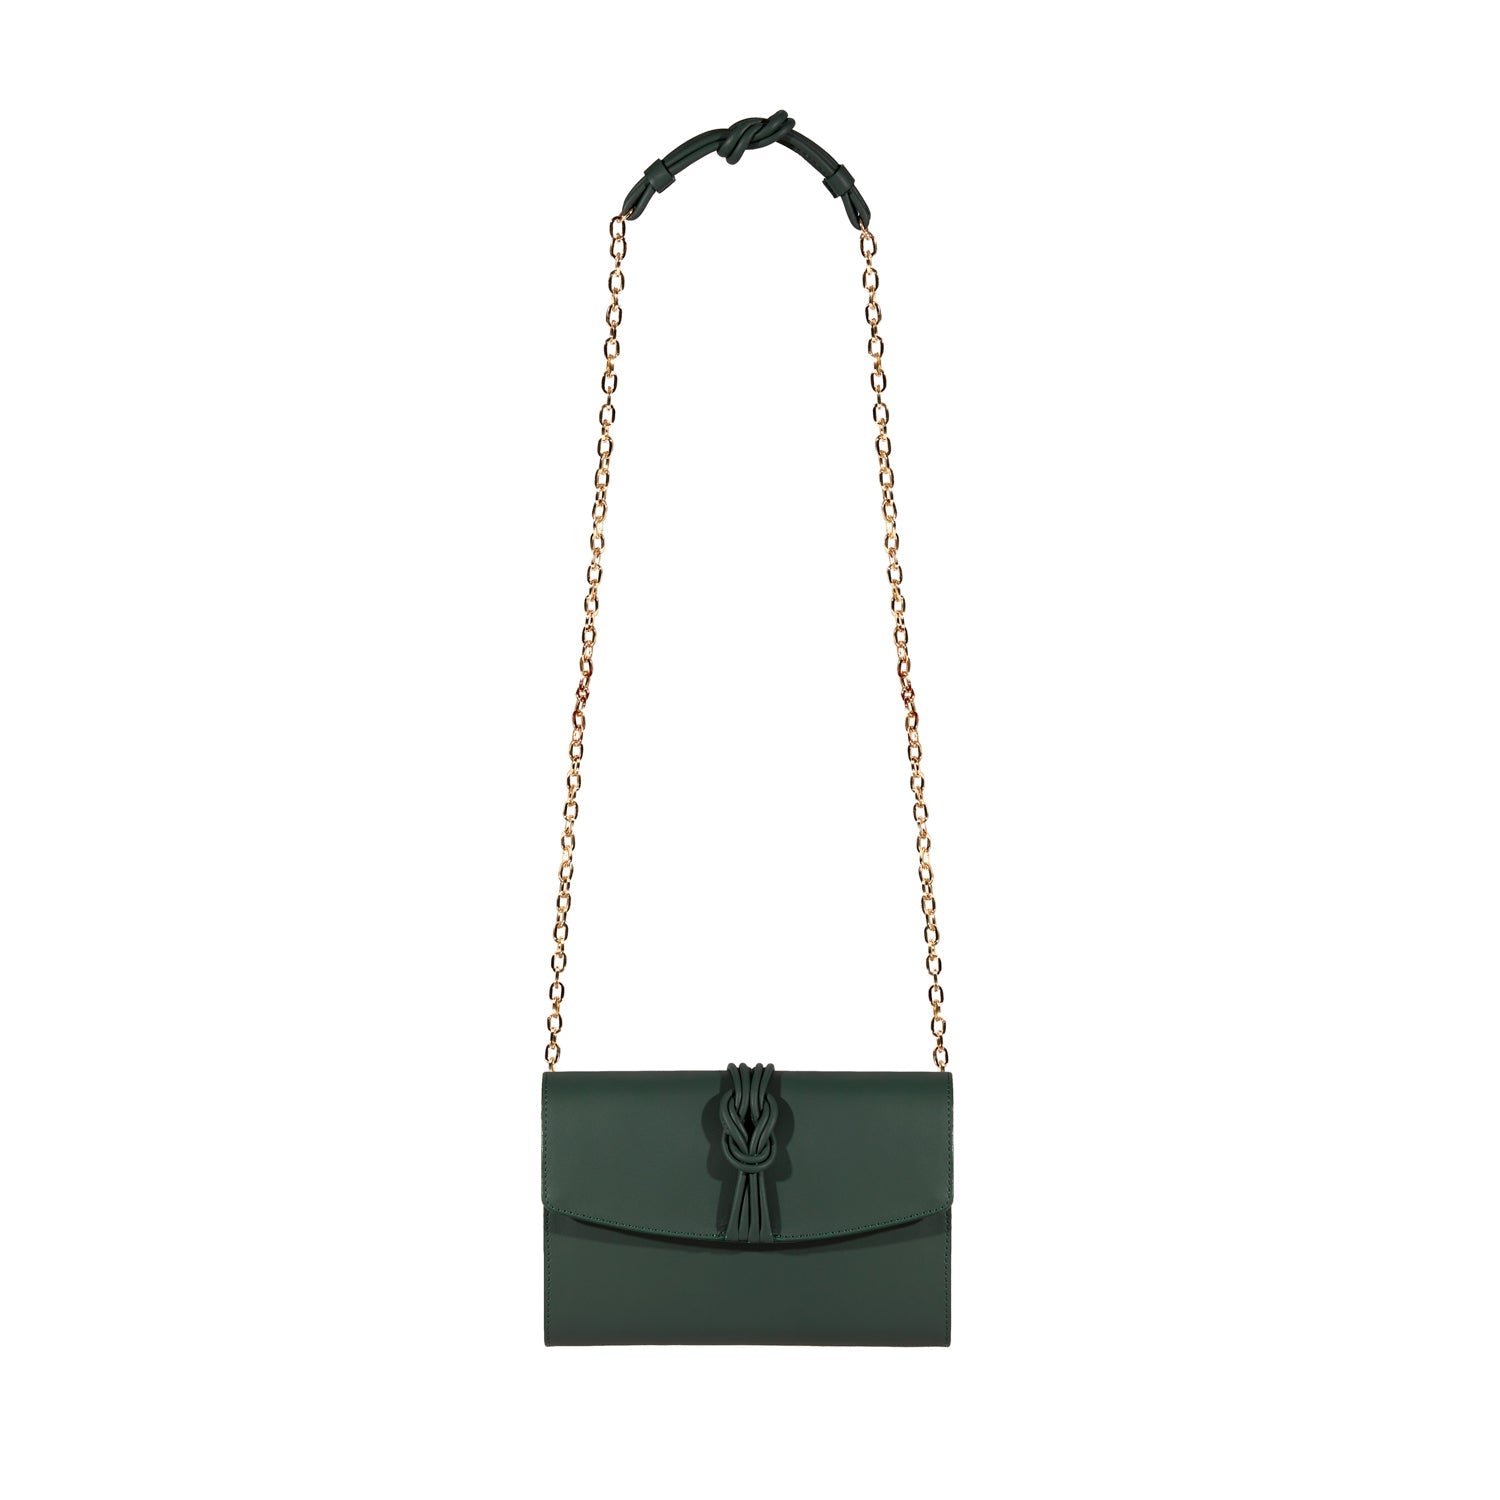 Midi Marylebone, Teal Green Clutch Bag